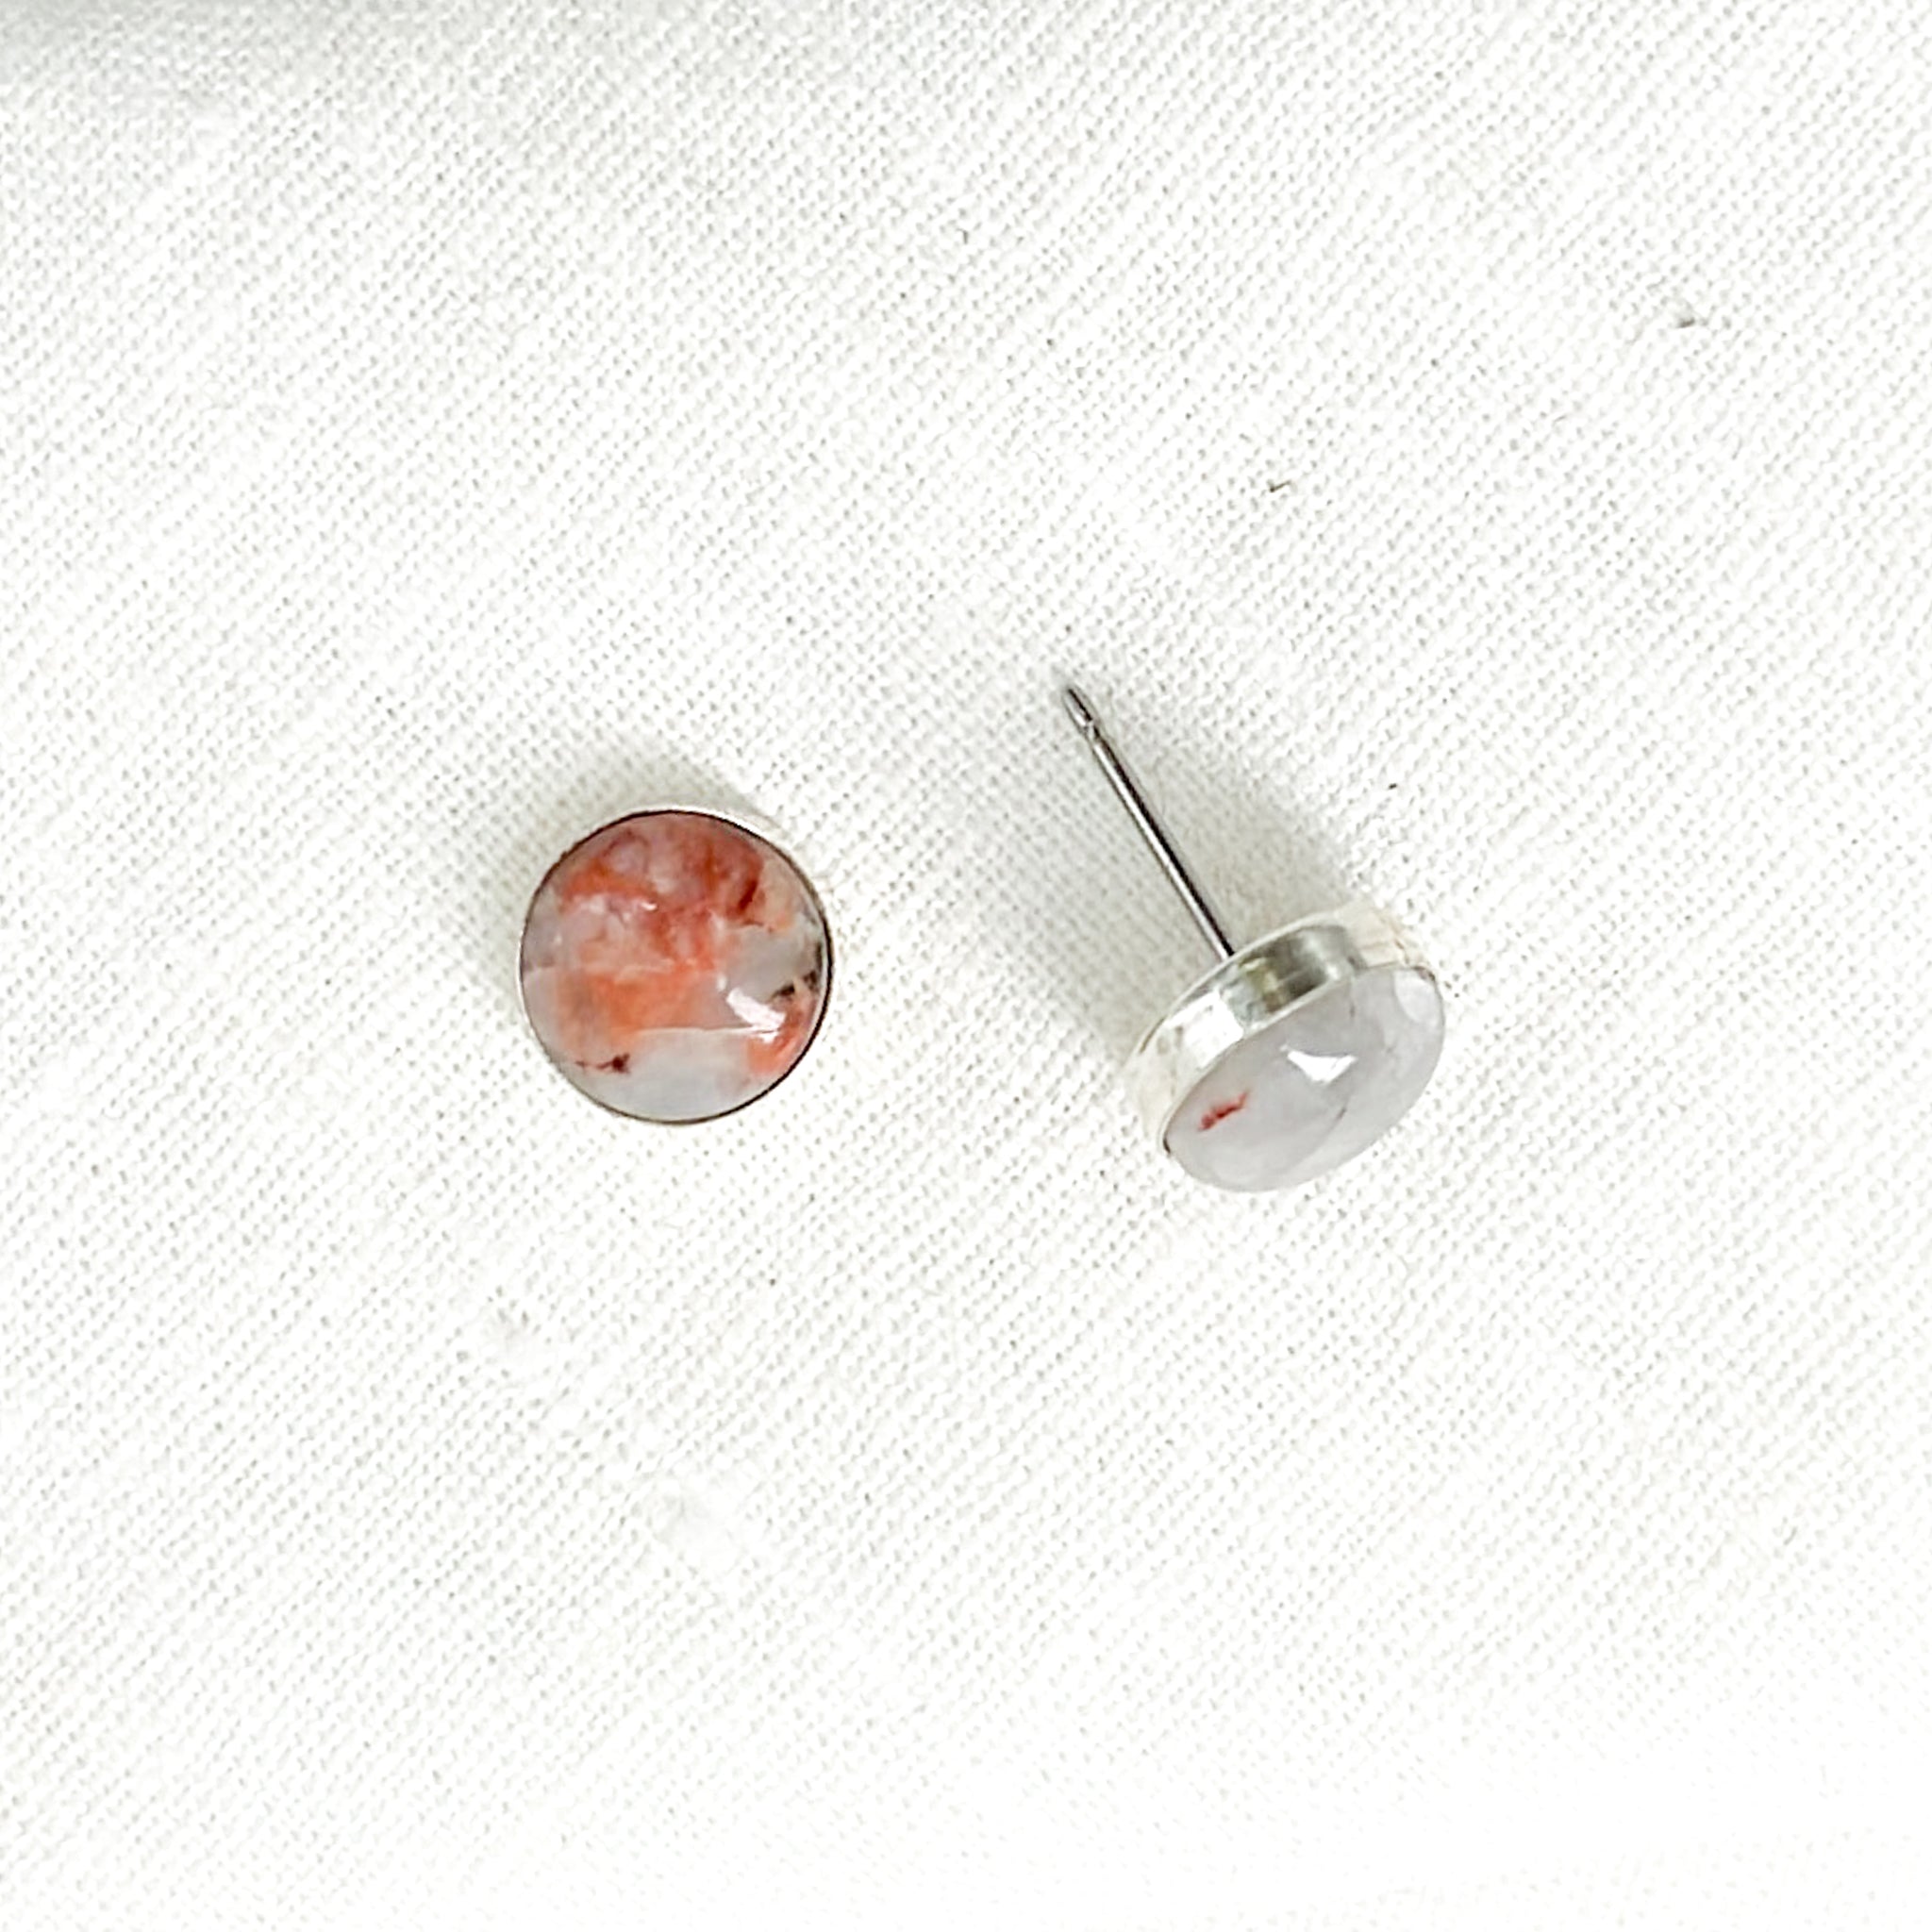 Petite Confluence Earrings - Pink Granite (Sisters, not twins!)